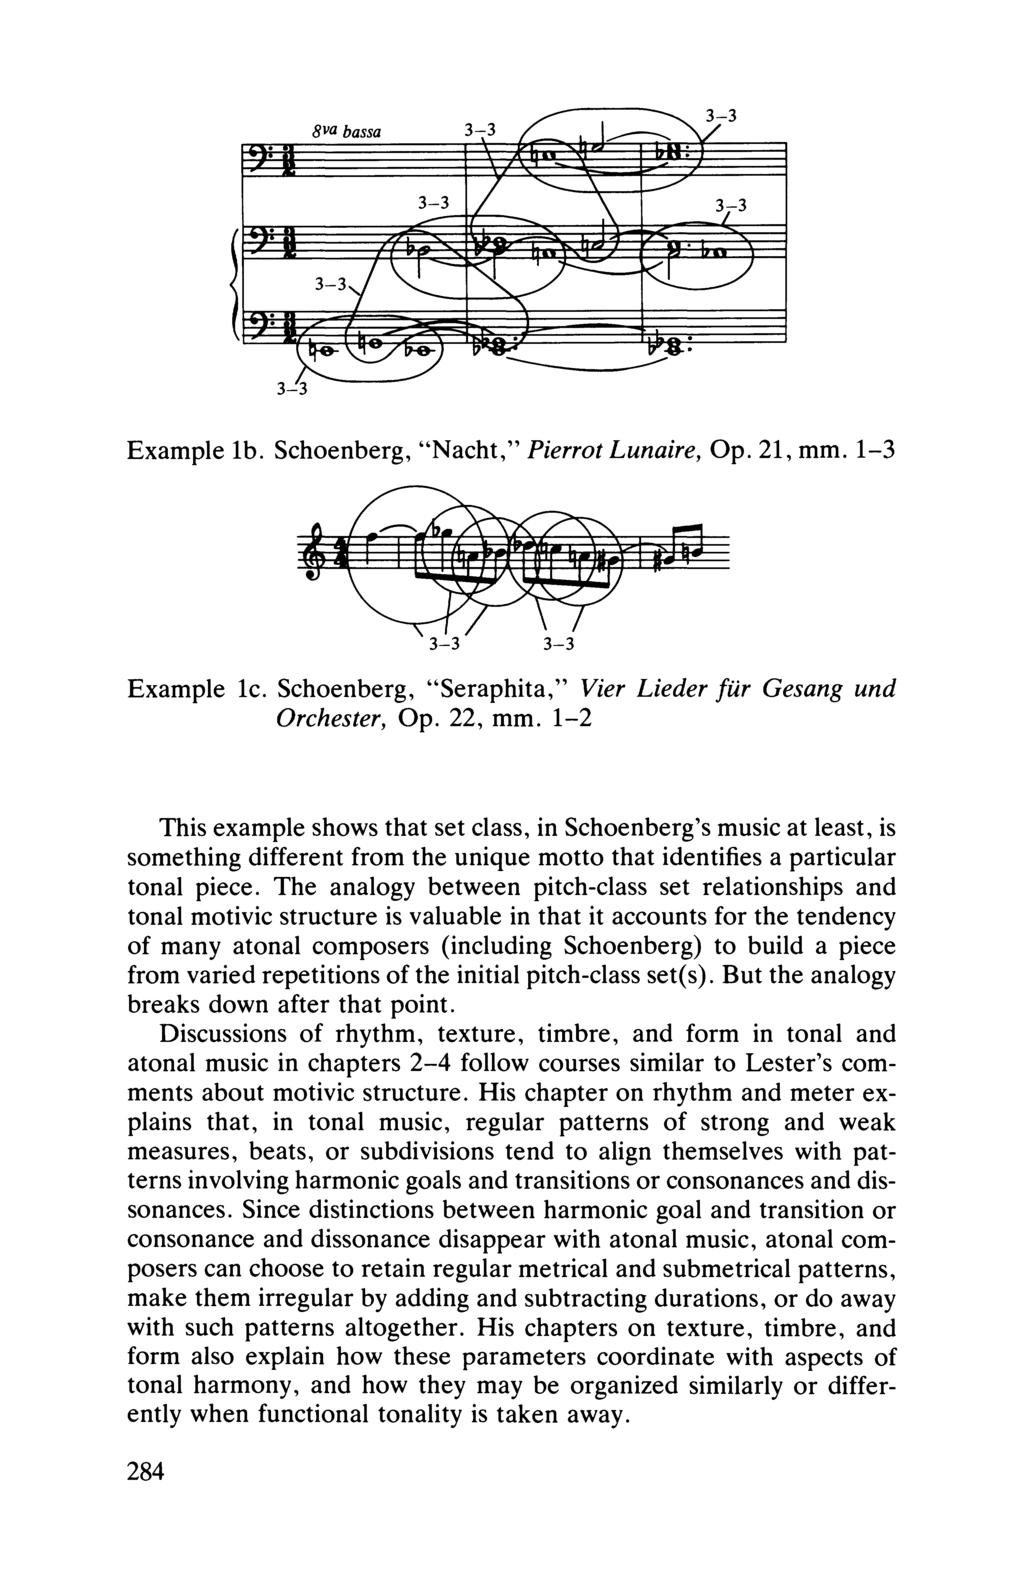 8va bassa 3 3 3 213: 3-3 3-3 3-3 Example lb. Schoenberg, "Nacht," Pierrot Lunaire, Op. 21, mm. 1-3 3-3 3-3 Example lc. Schoenberg, "Seraphita," Vier Lieder fur Gesang und Orchester, Op. 22, mm.